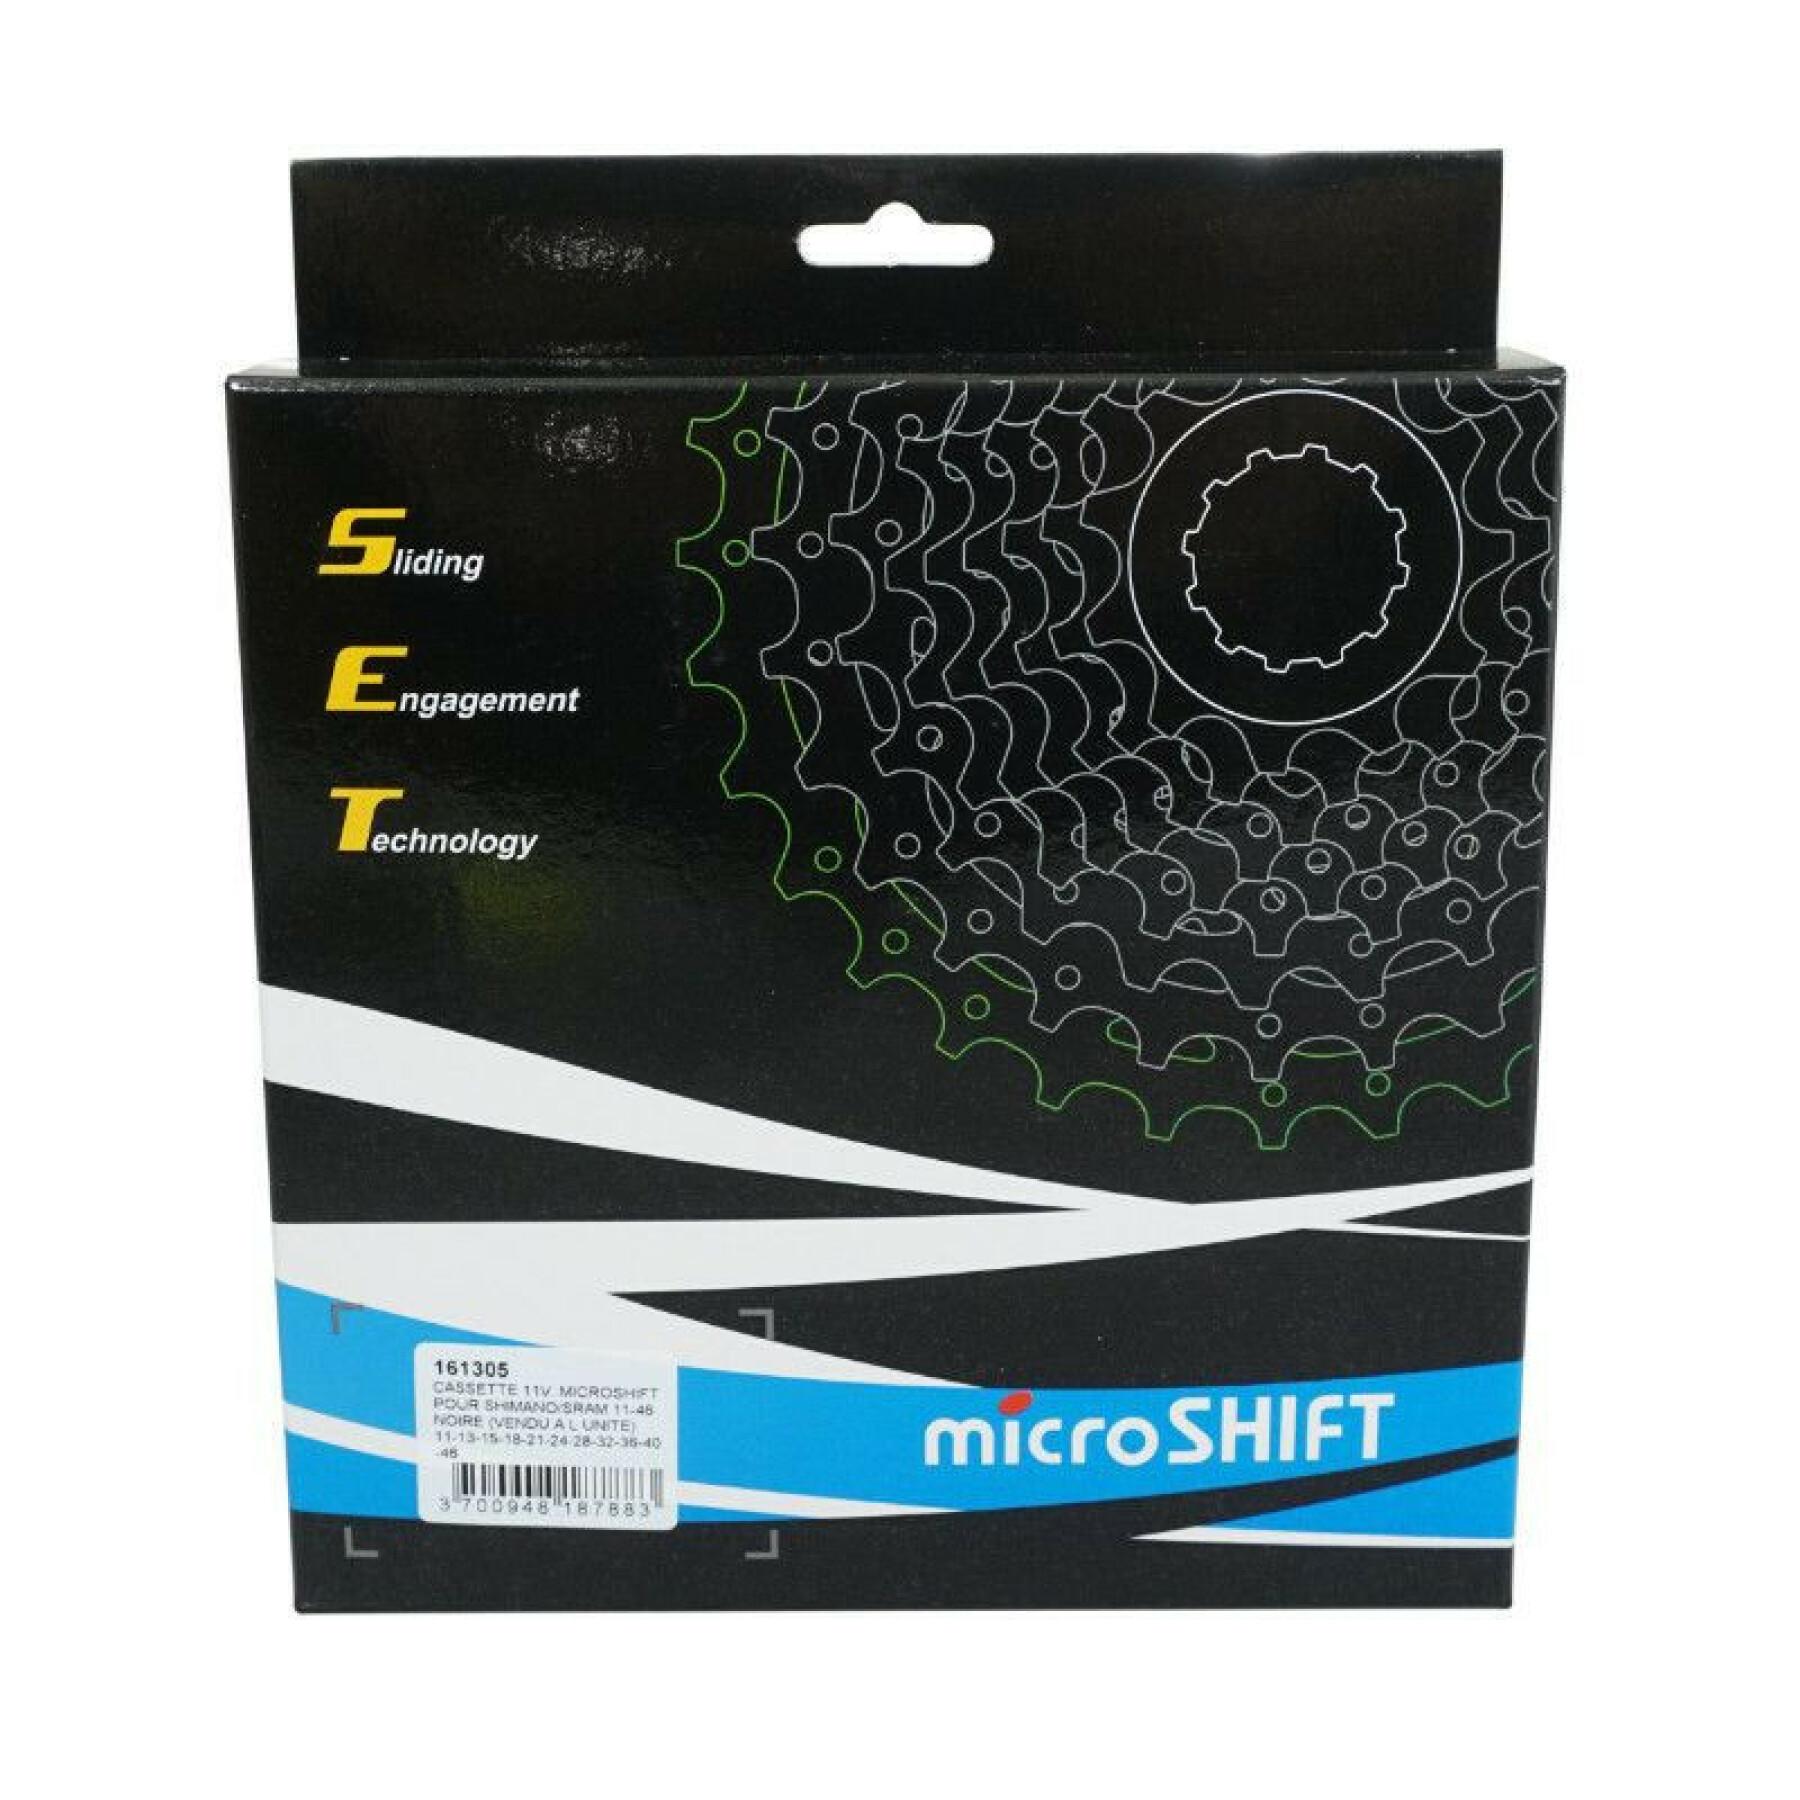 MTB-Kassette Microshift Shimano-Sram 11 v 11-46 T